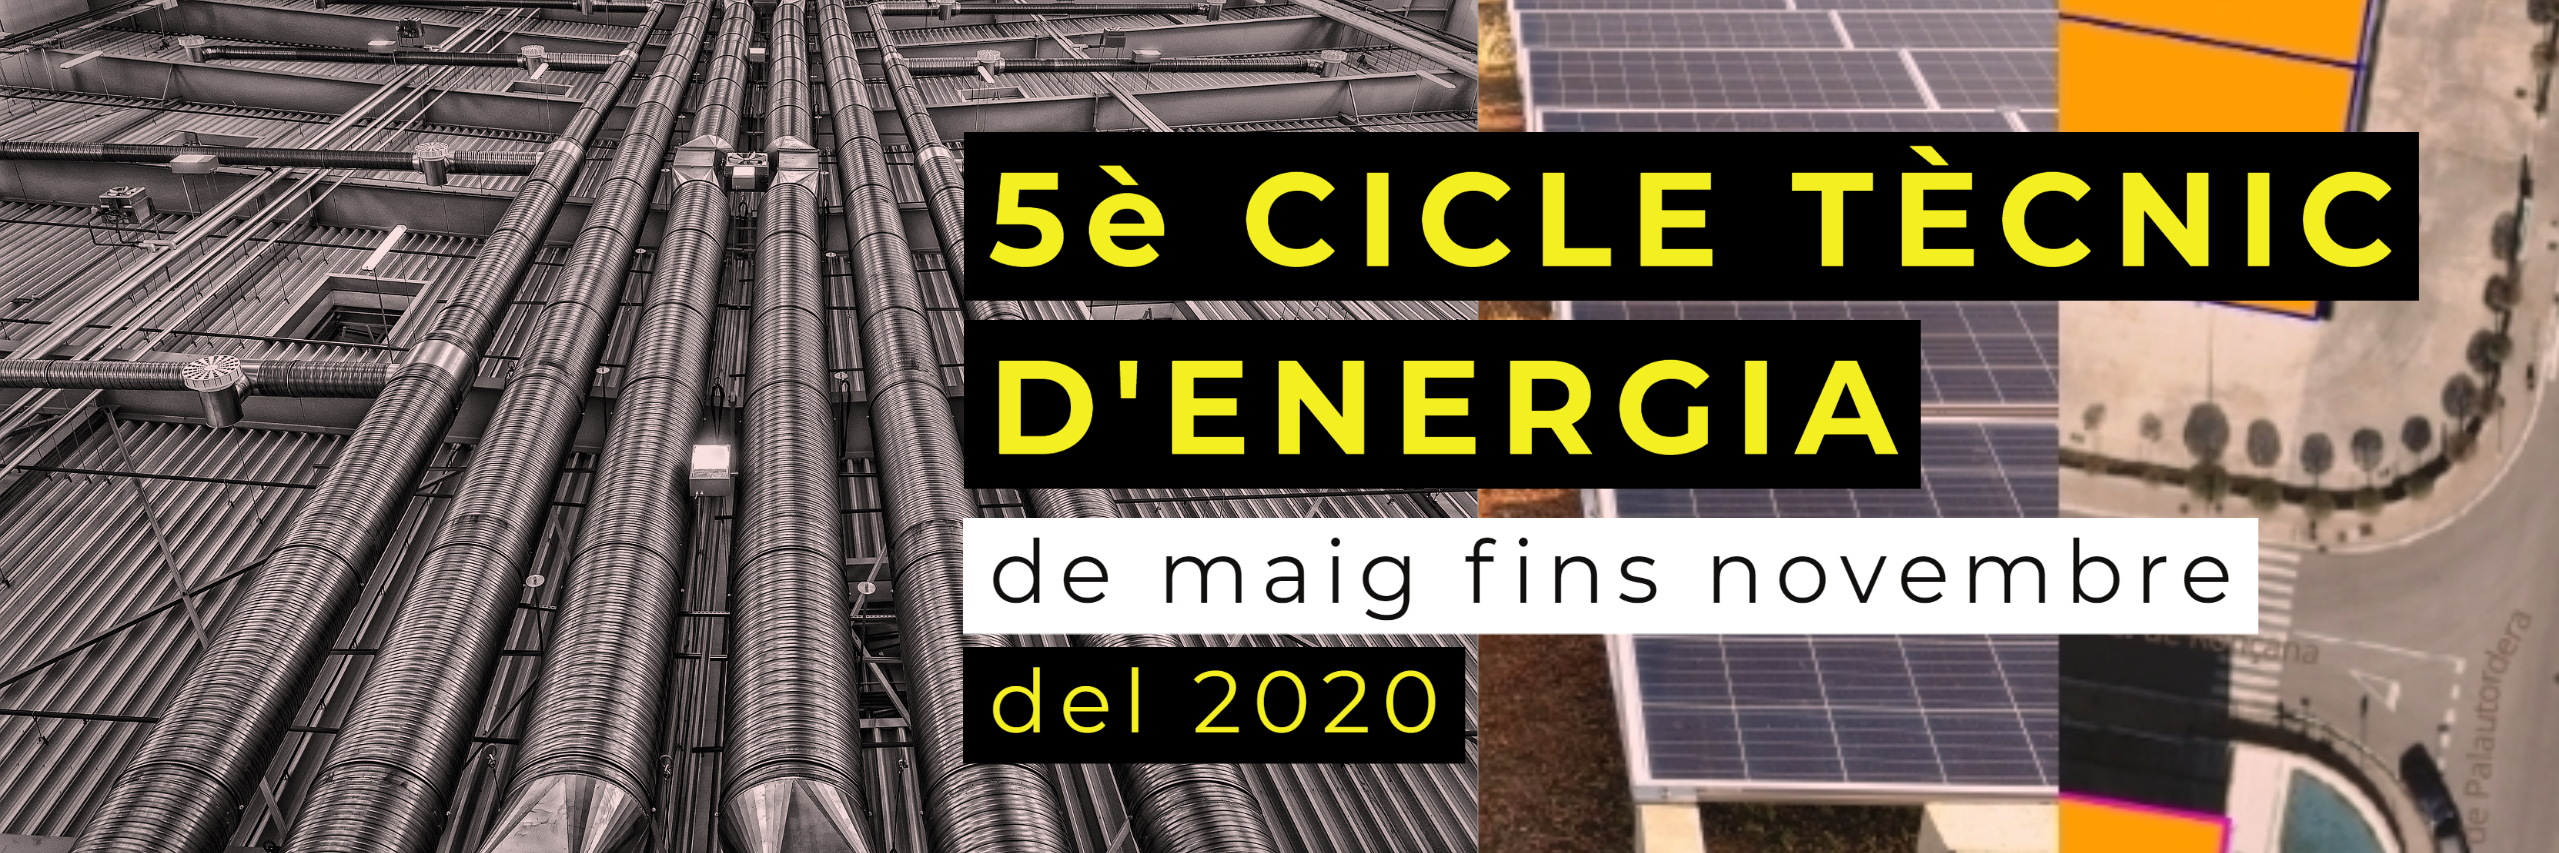 Cicle dEnergia 2020 1